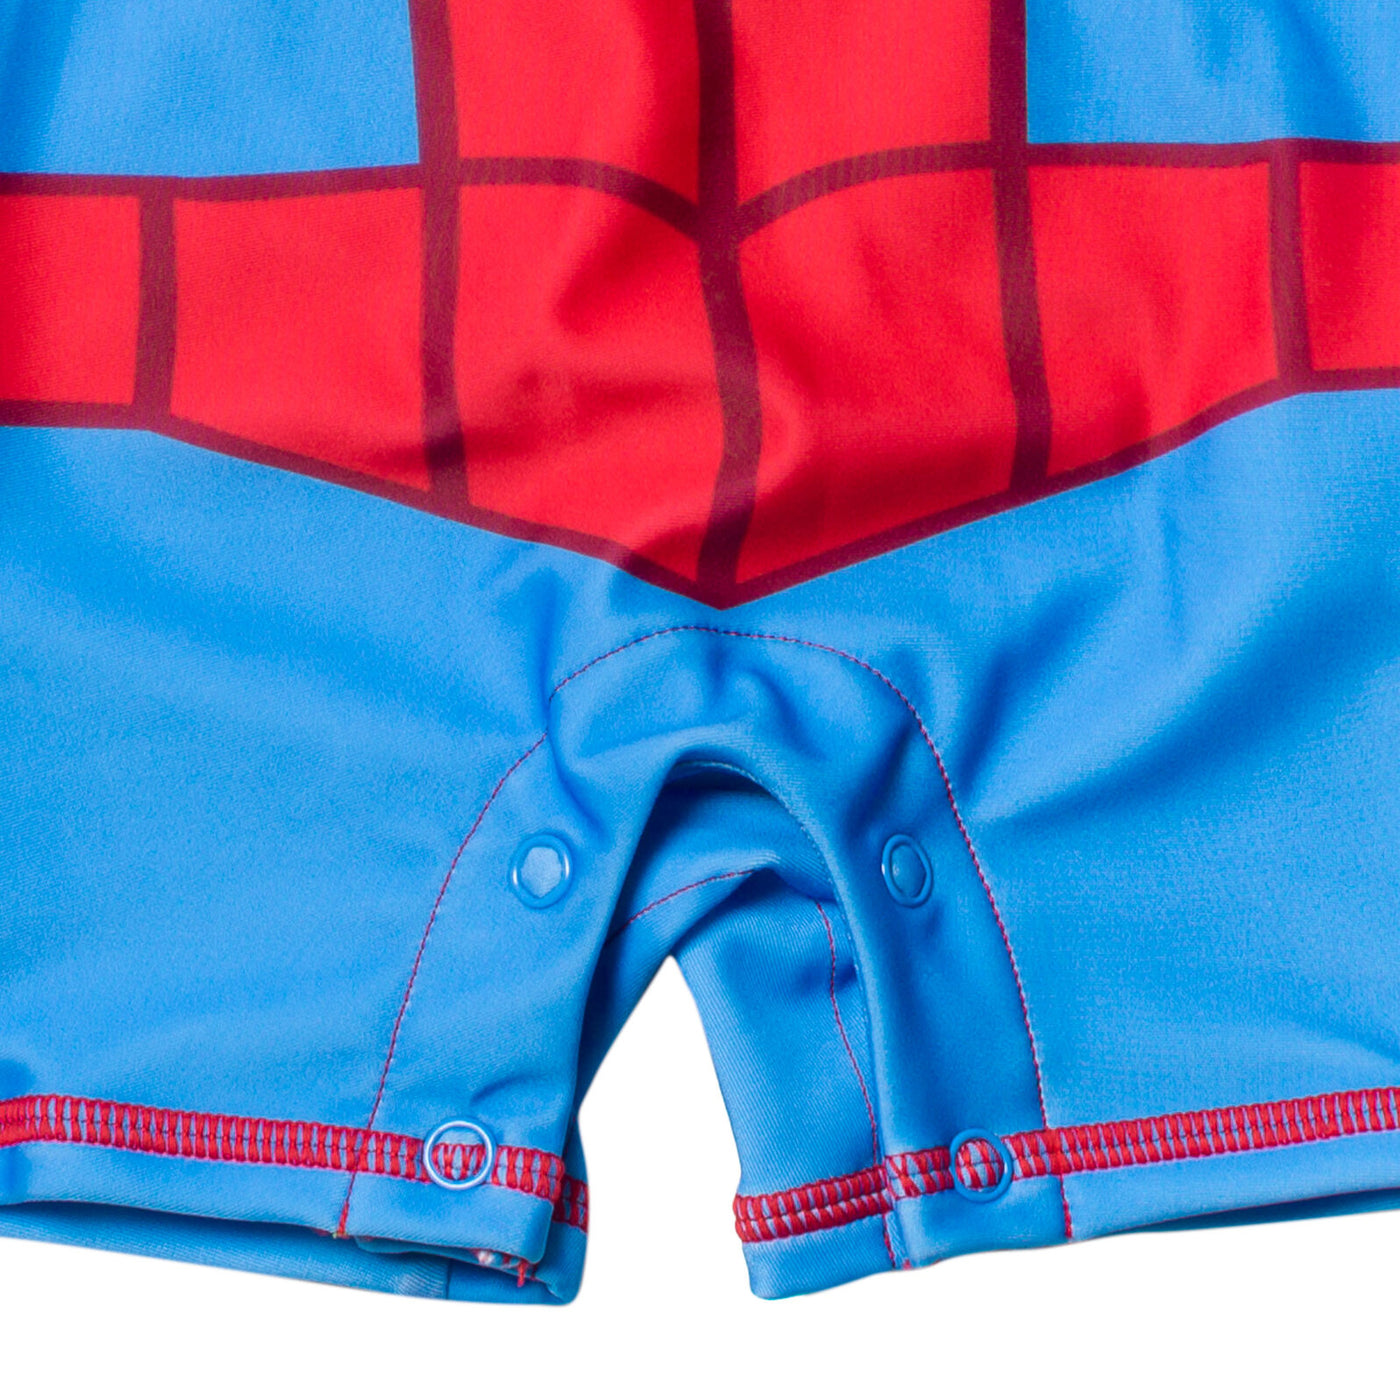 Marvel Avengers Spider-Man UPF 50+ Zip Up One Piece Bathing Suit